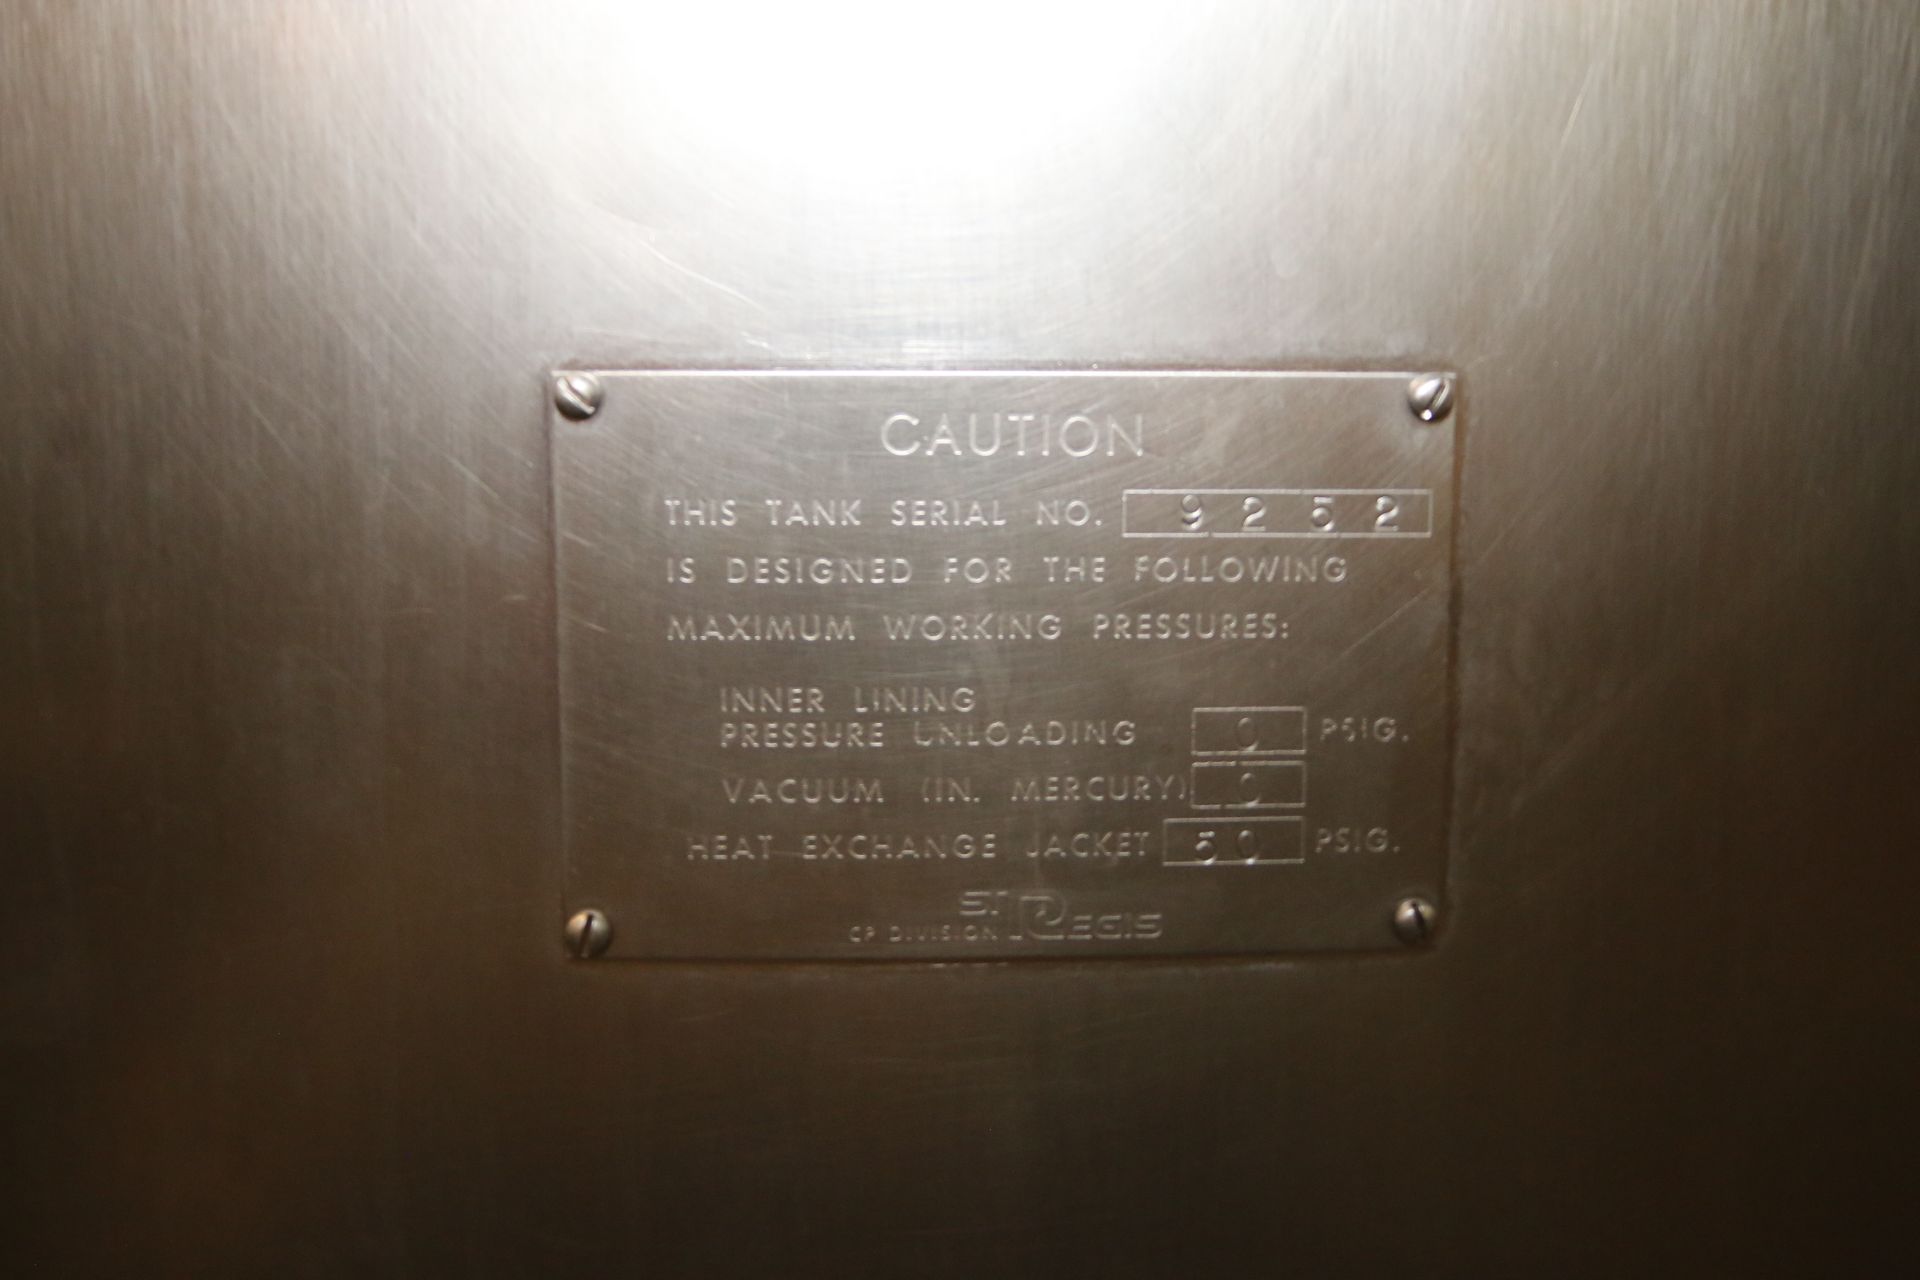 St. Regis 500 Gal. S/S Processor, S/N 450-9252, with 50 PSIG Heat Exchange Jacket, with (2) S/S - Image 5 of 7